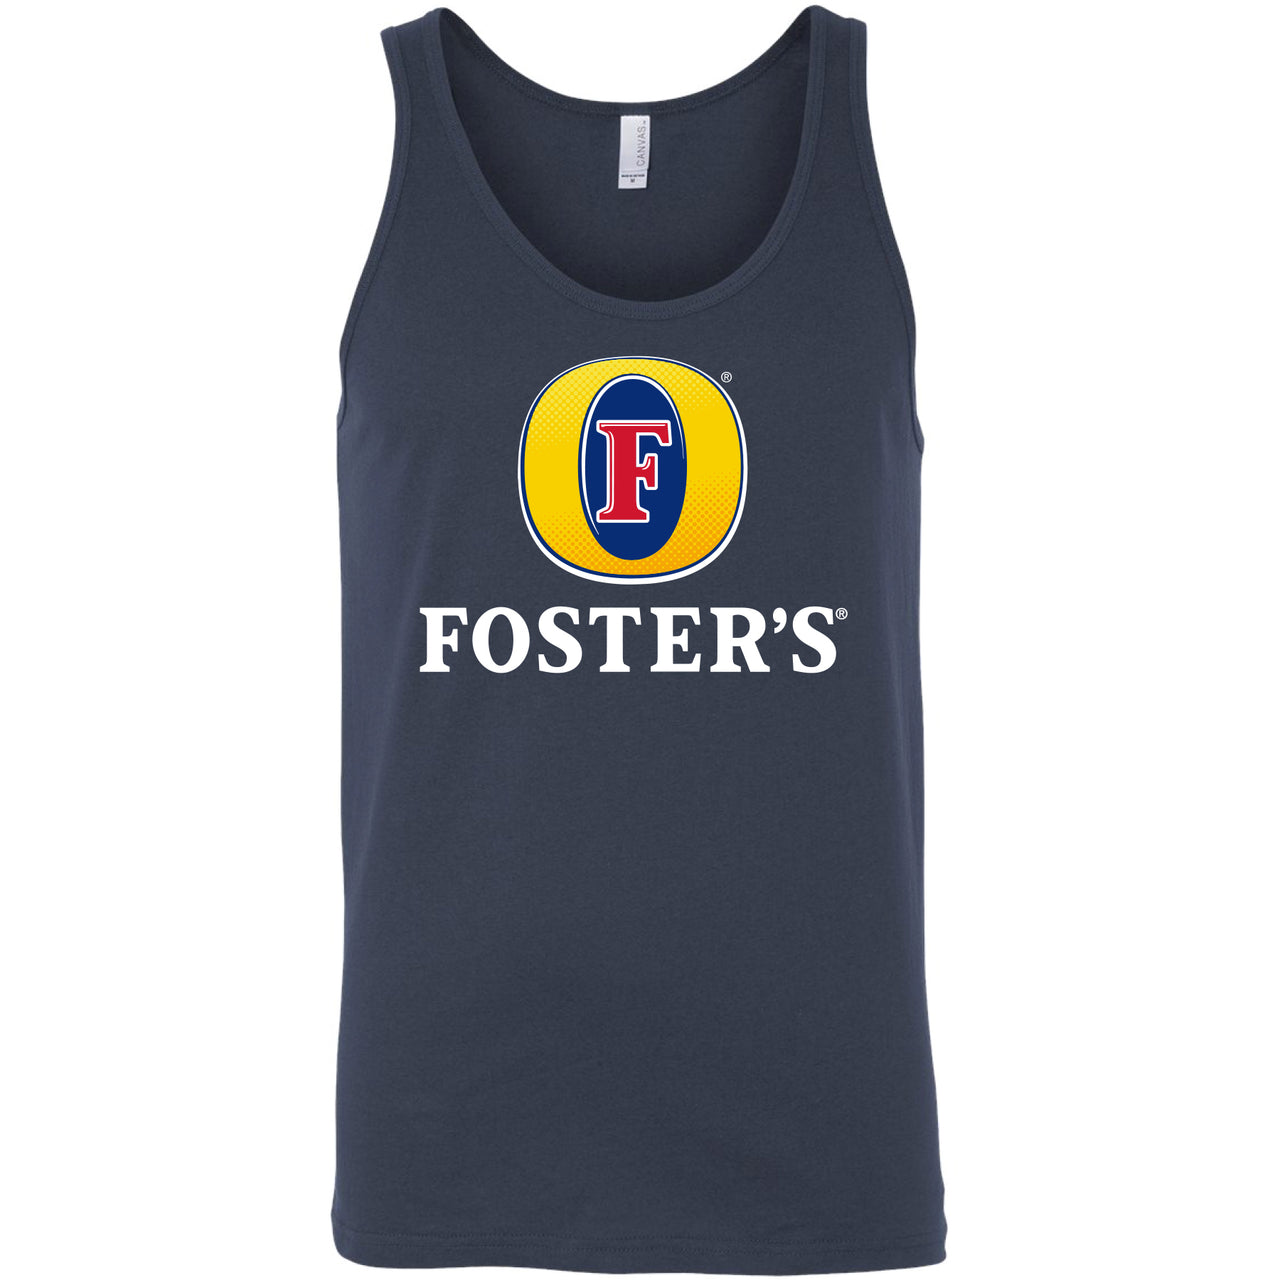 Foster's Logo Tank Top